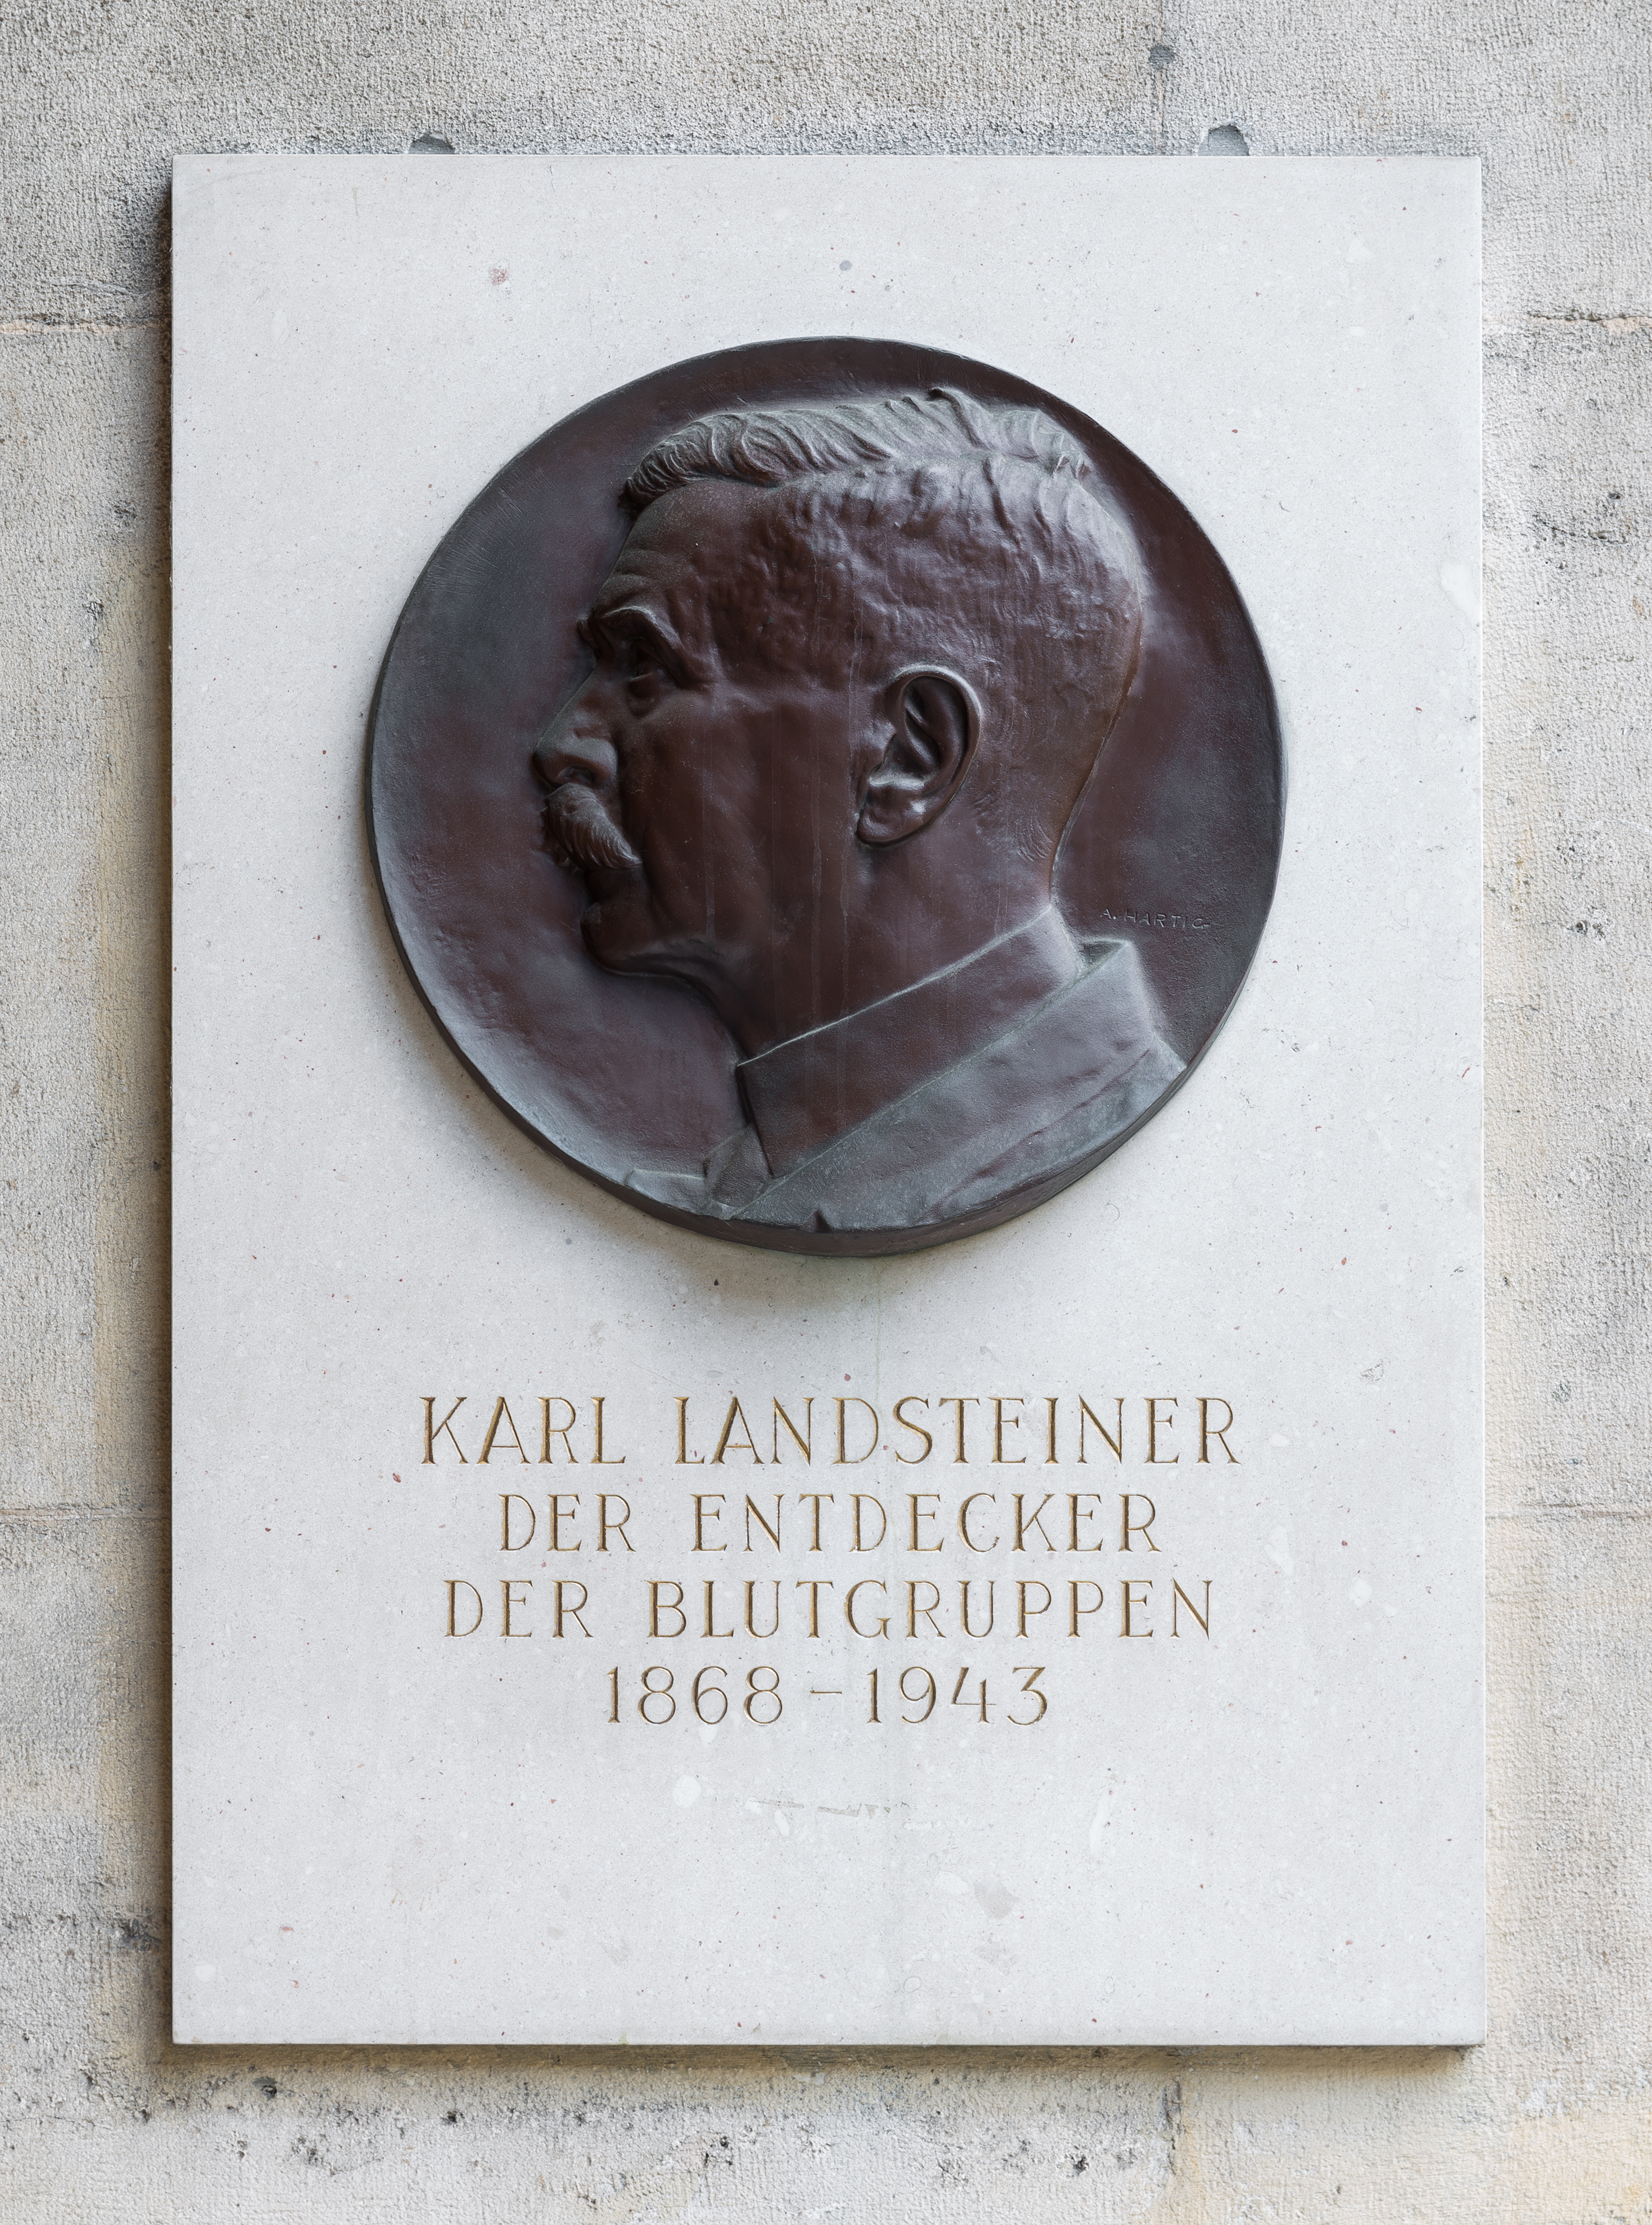 Karl Landsteiner (1868-1943), bas-relief (bronze) in the Arkadenhof of the University of Vienna-